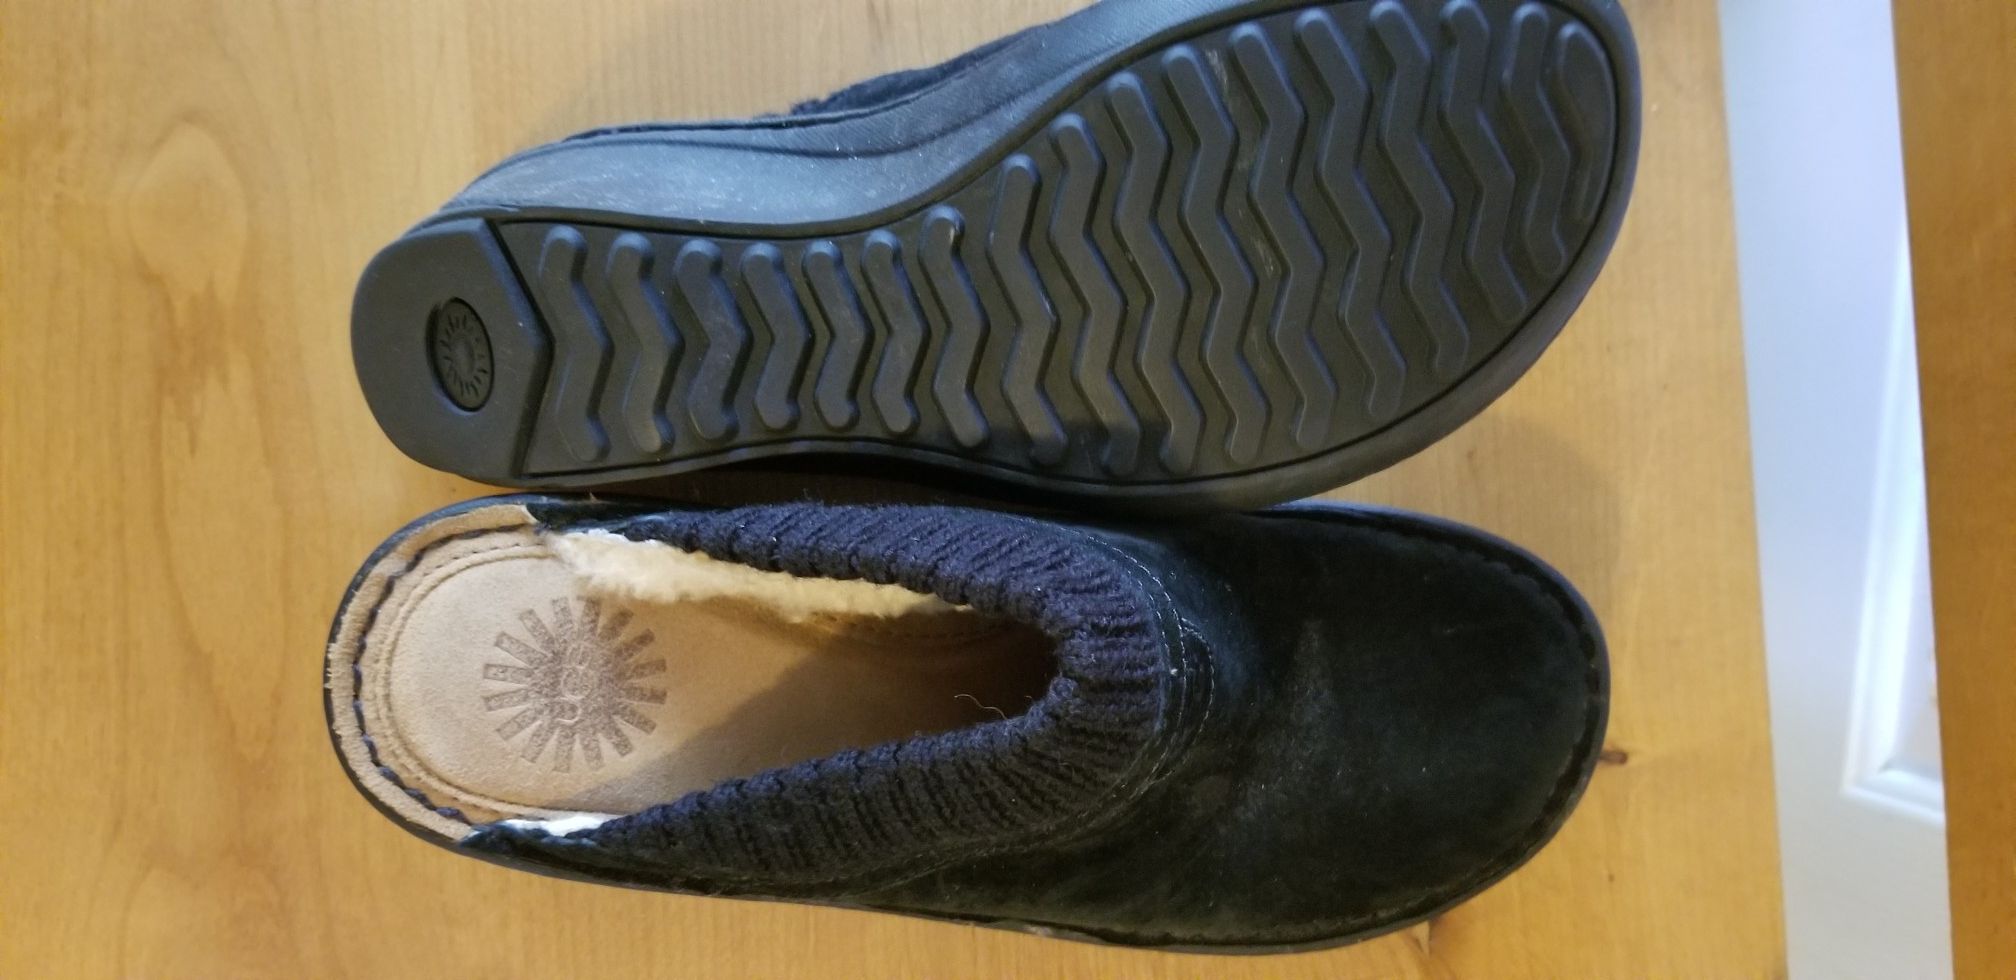 Uggs women shoes size 8 black